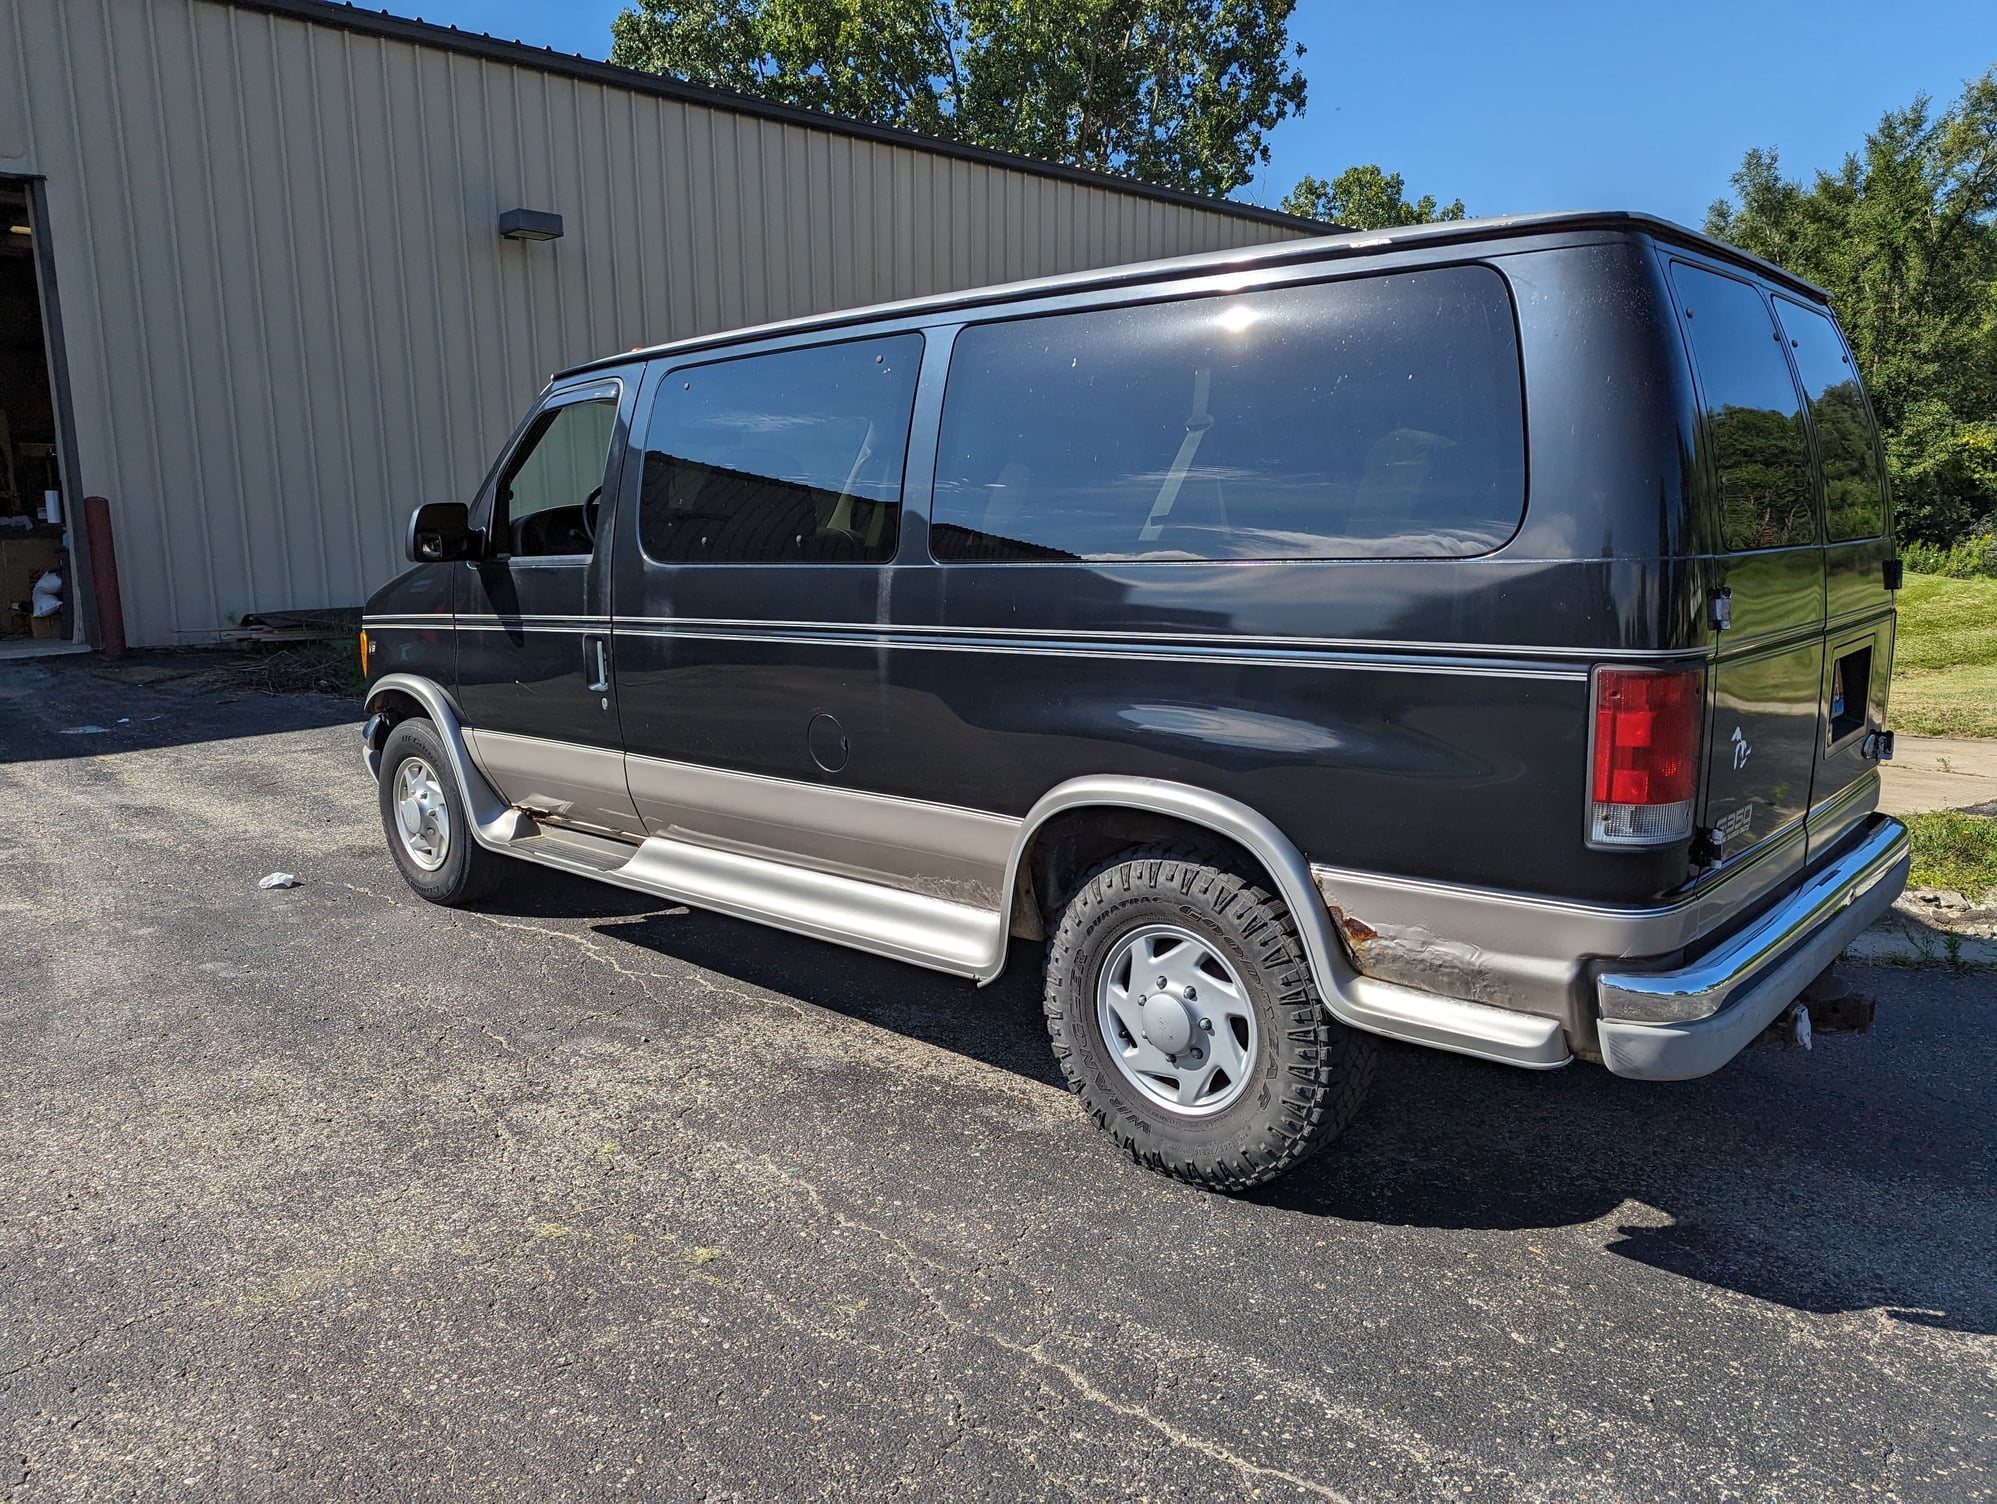 2002 Ford E-350 Econoline Club Wagon - 7.3 Diesel E350 7 passenger Van - Used - VIN 1FMNE31F42HA84562 - 242,000 Miles - 8 cyl - 2WD - Automatic - Van - Black - Ann Arbor, MI 48103, United States